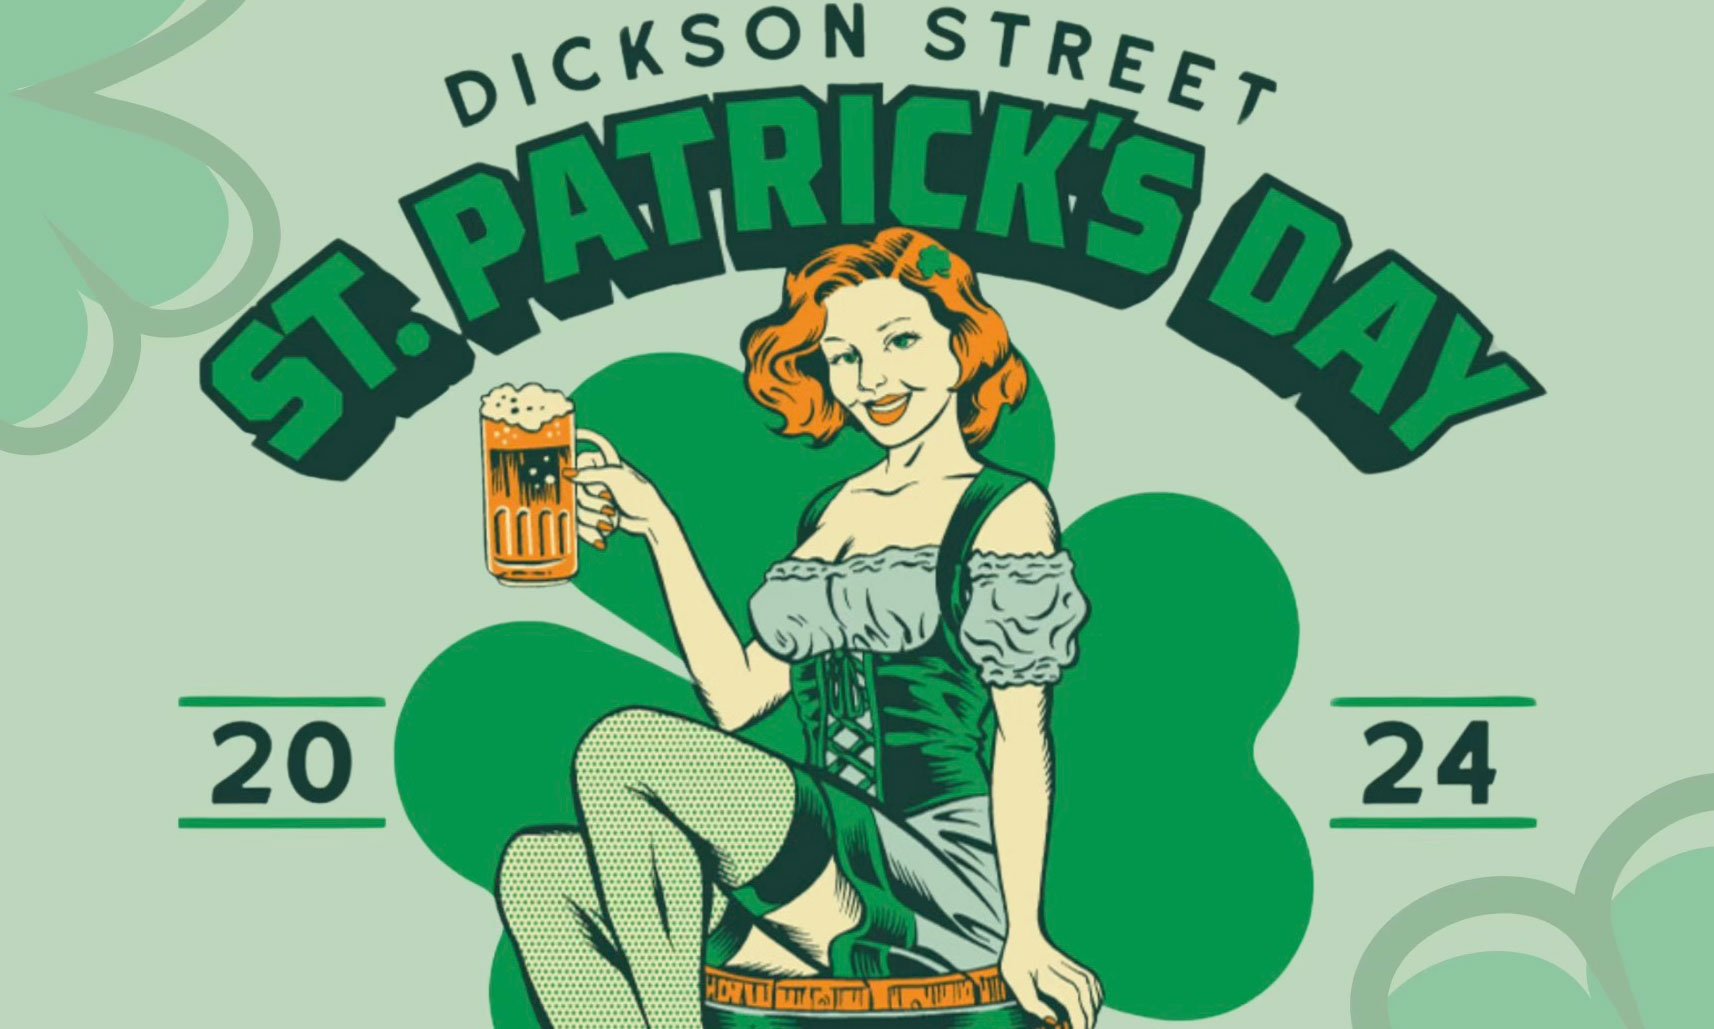 Dickson Street businesses plan St. Patrick’s Day Pub Crawl